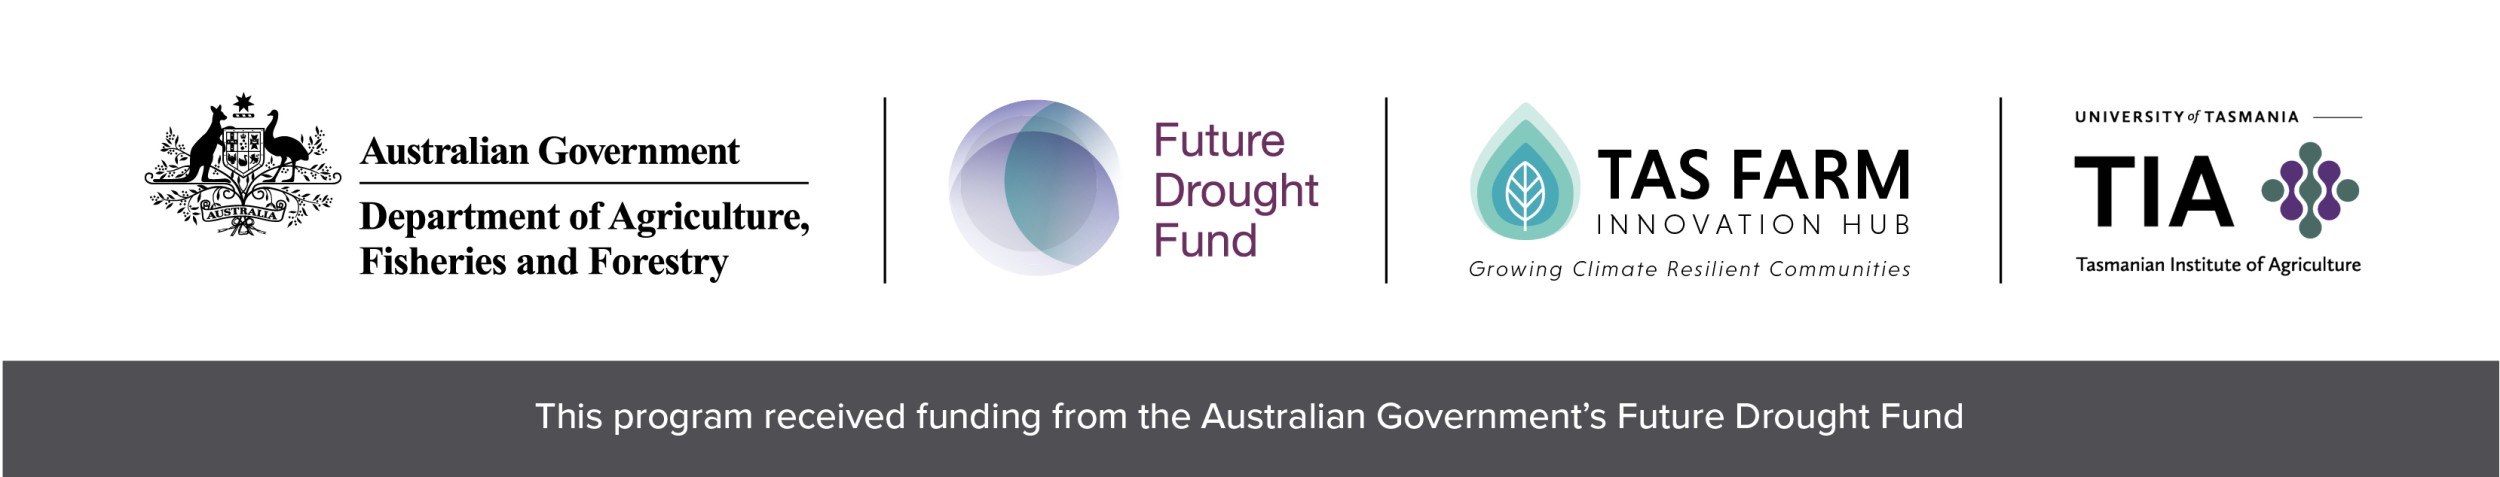 Australian Government’s Future Drought Fund